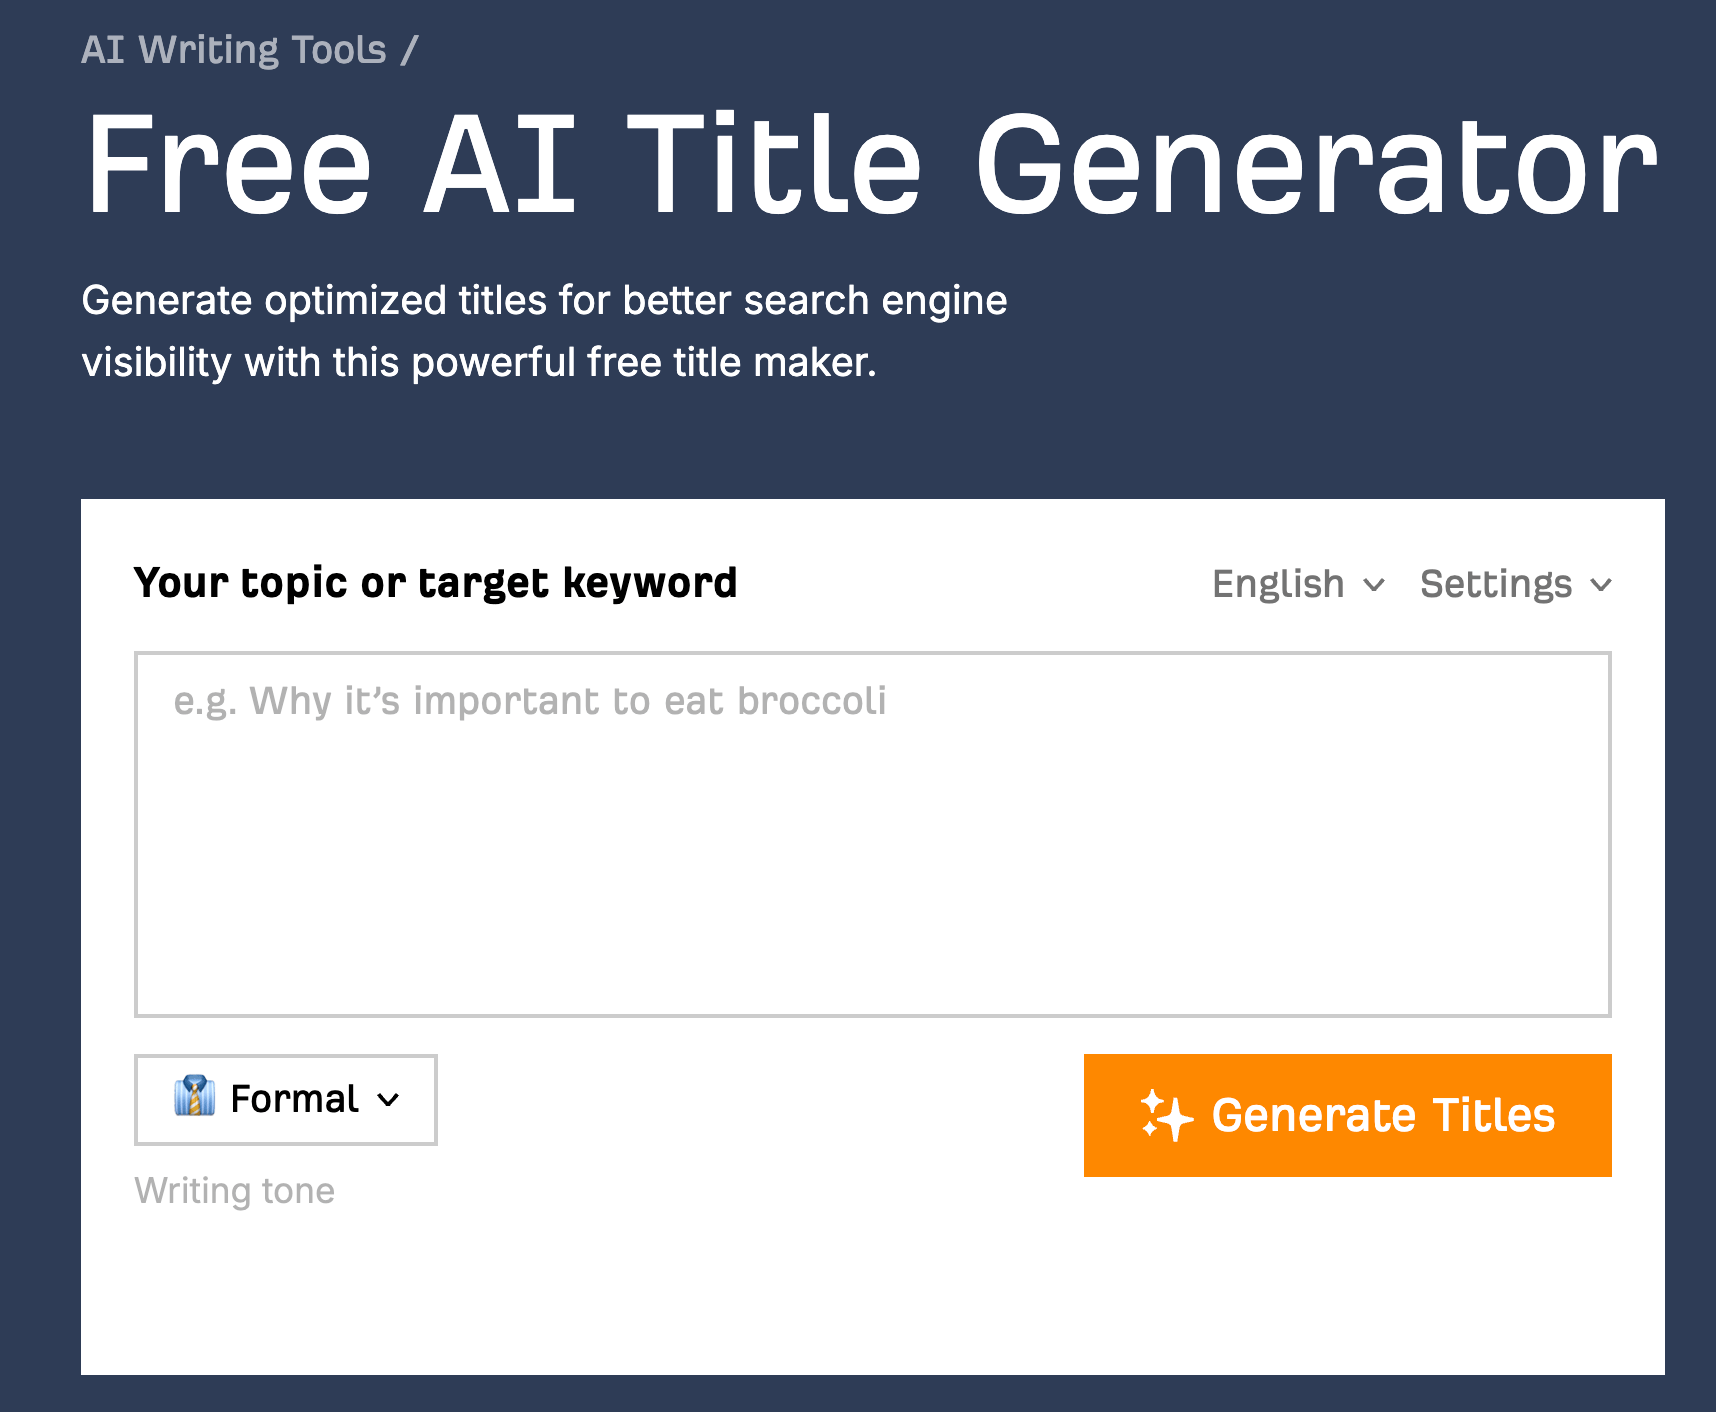 Ahrefs' free AI Title Generator